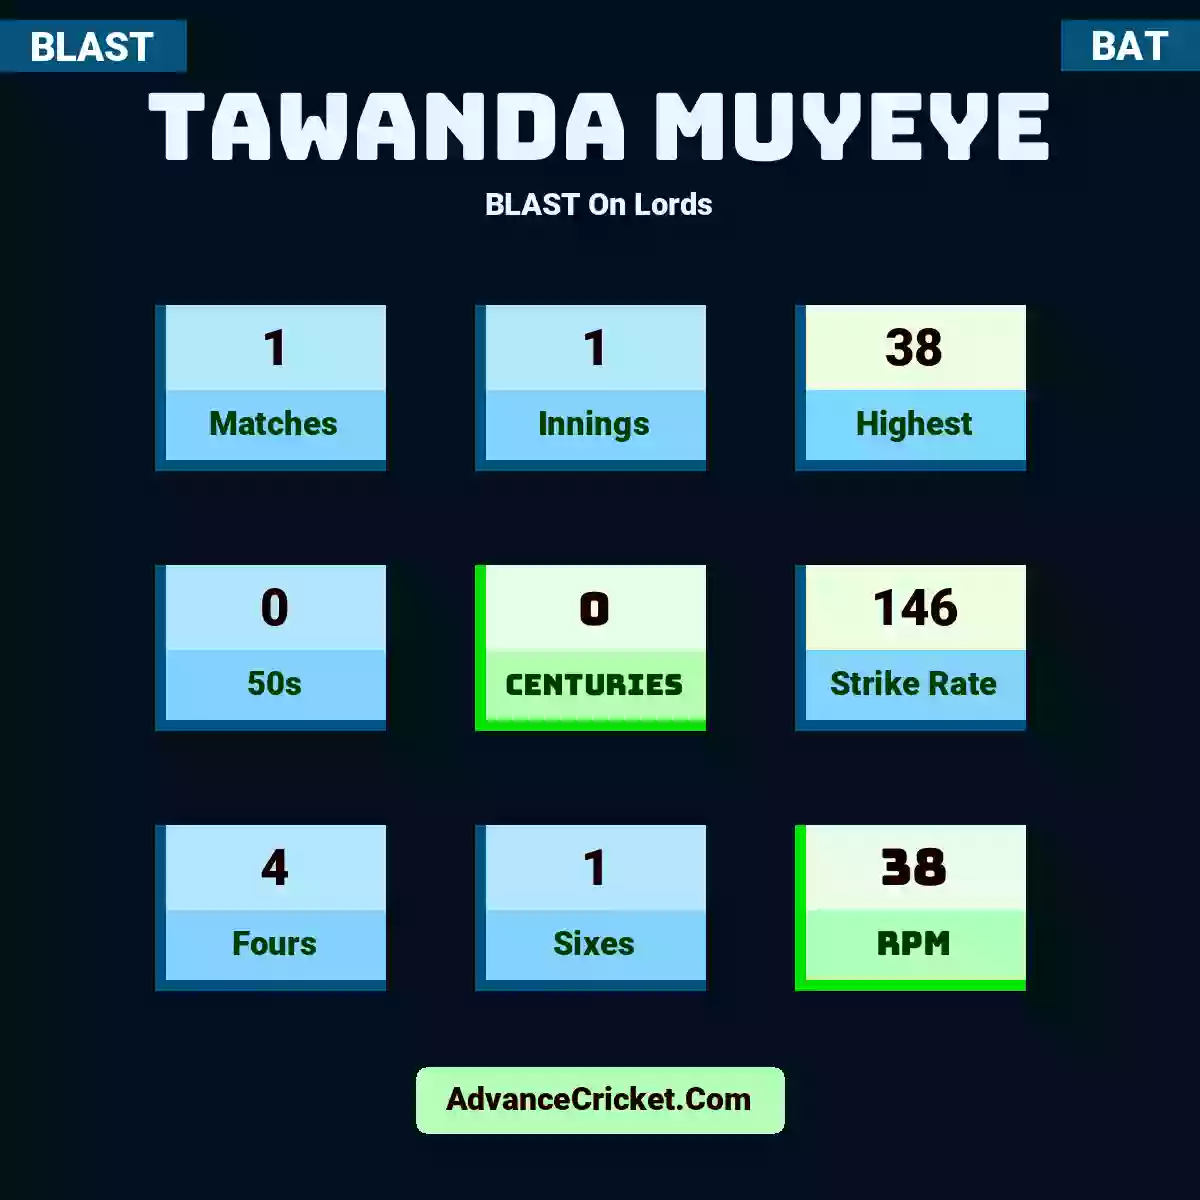 Tawanda Muyeye BLAST  On Lords, Tawanda Muyeye played 1 matches, scored 38 runs as highest, 0 half-centuries, and 0 centuries, with a strike rate of 146. T.Muyeye hit 4 fours and 1 sixes, with an RPM of 38.